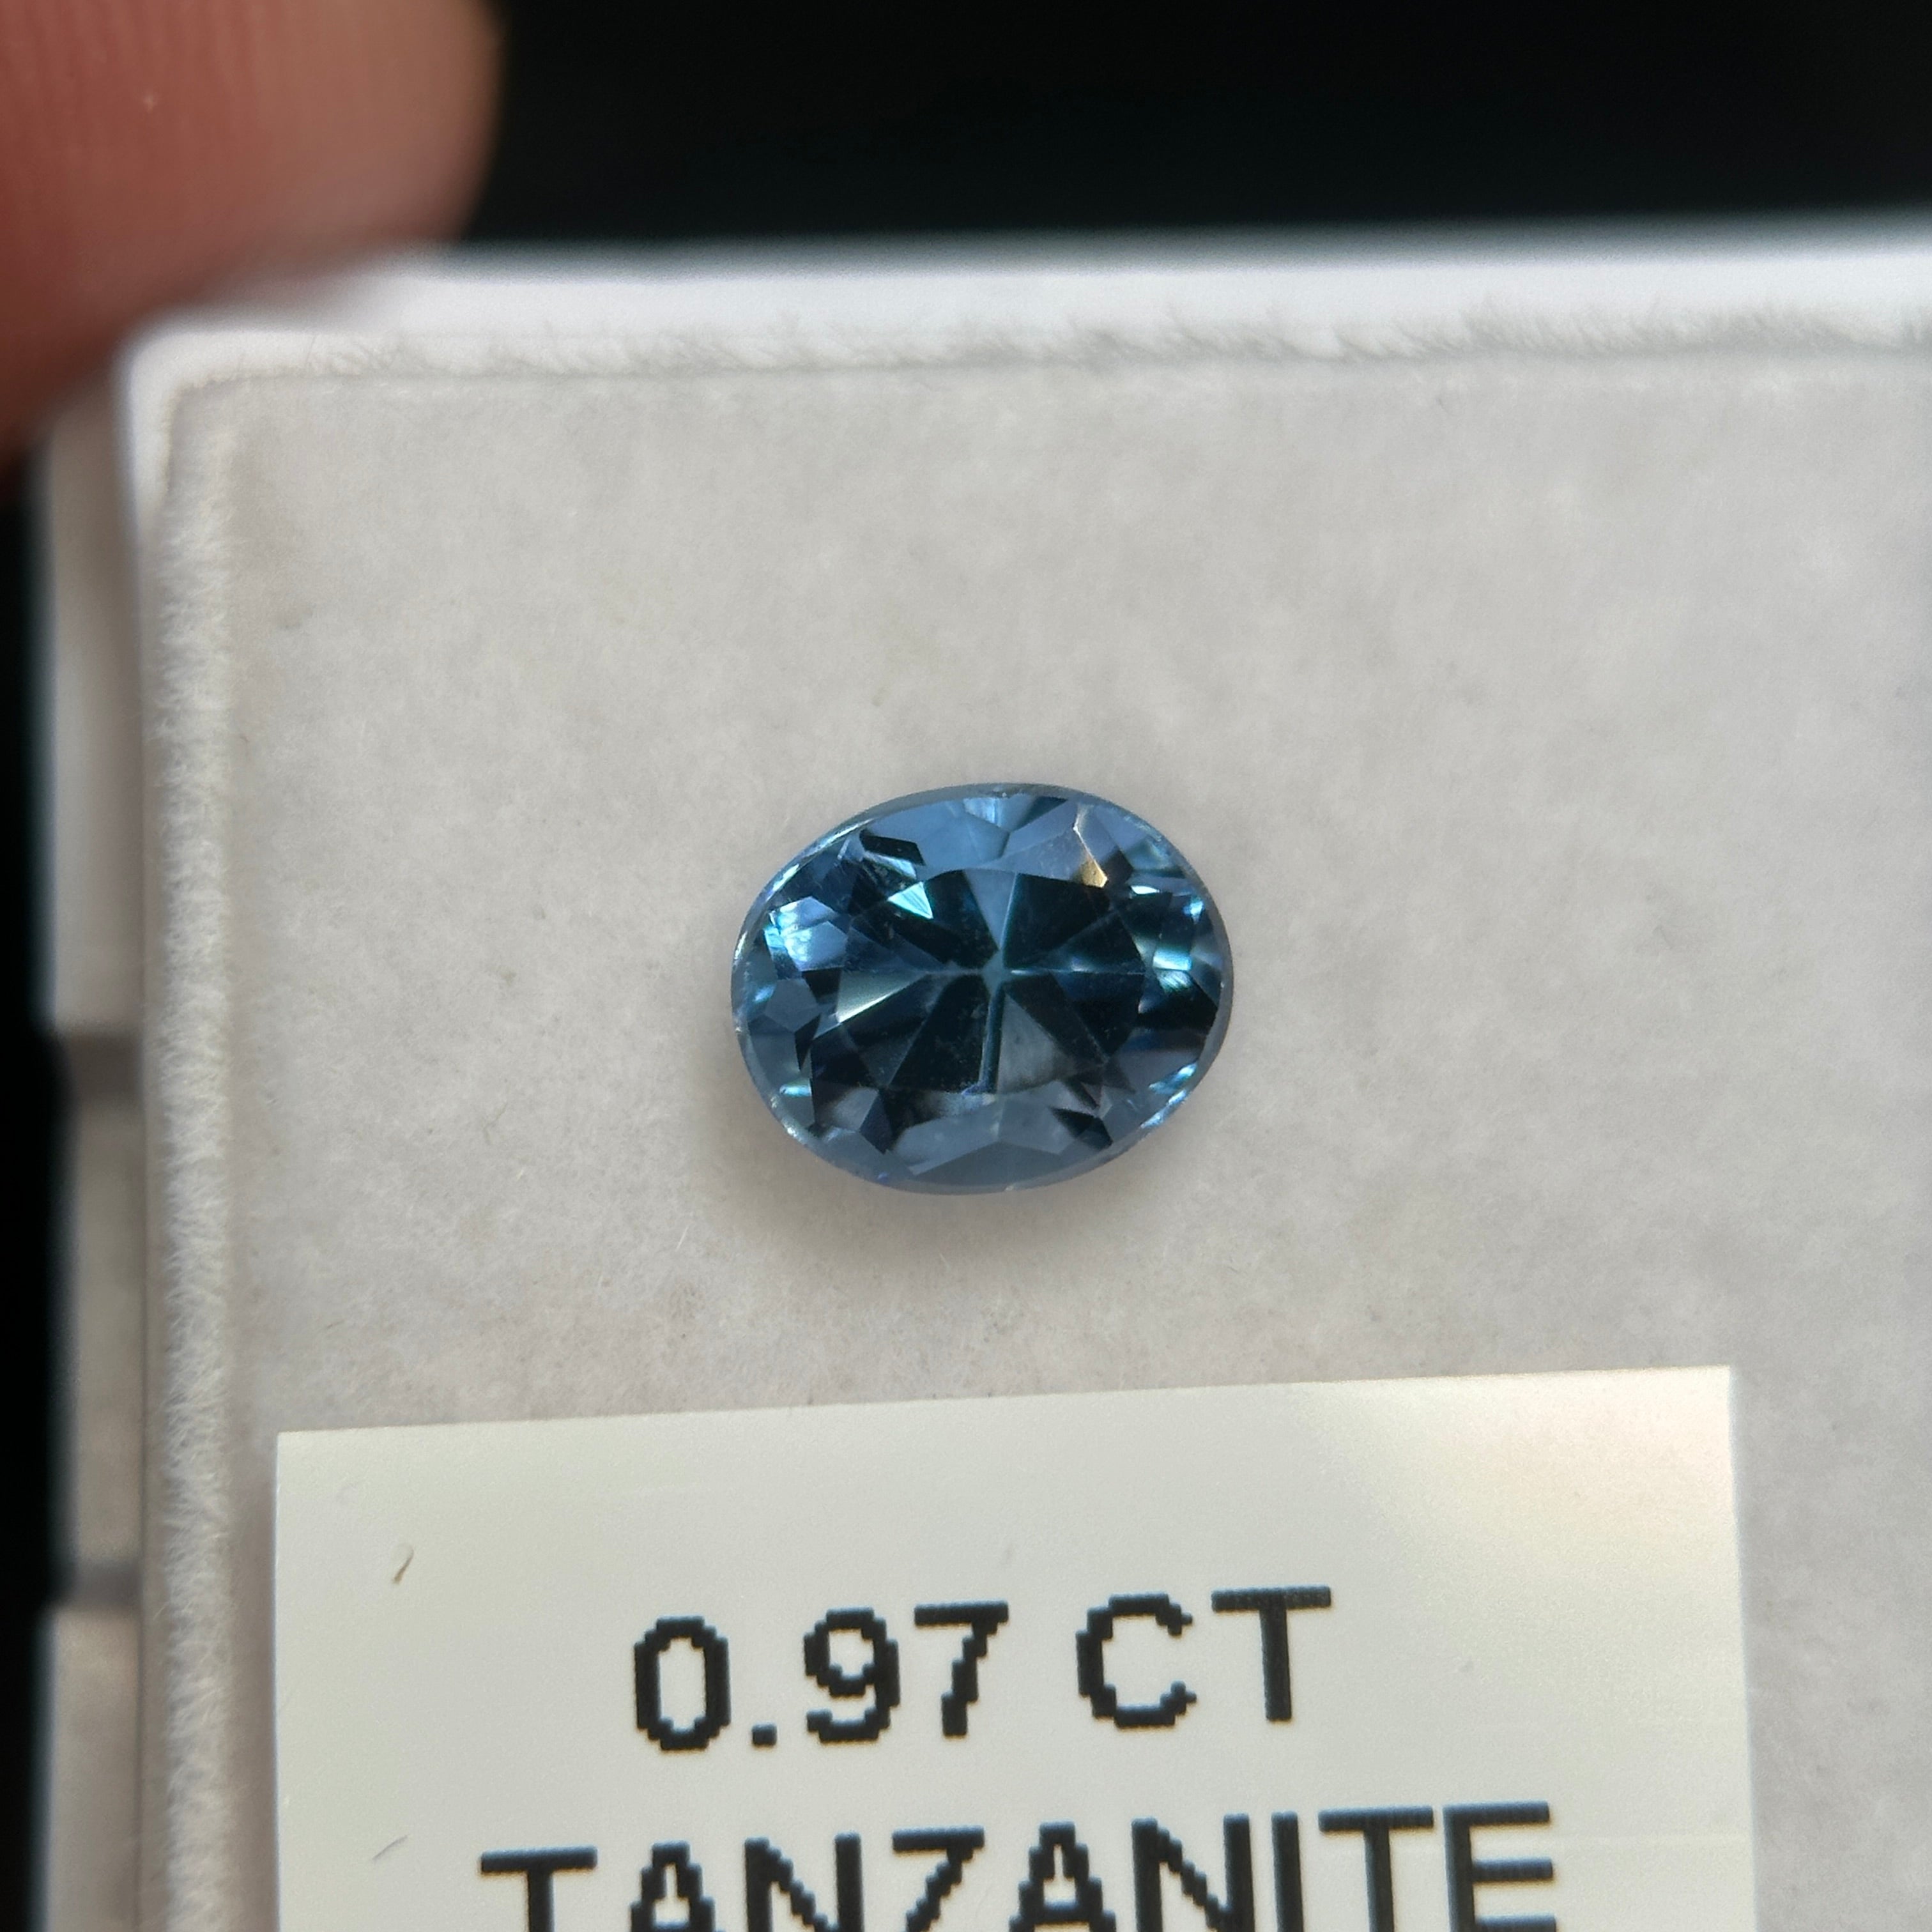 0.97ct Tanzanite, Tanzania, Untreated Unheated